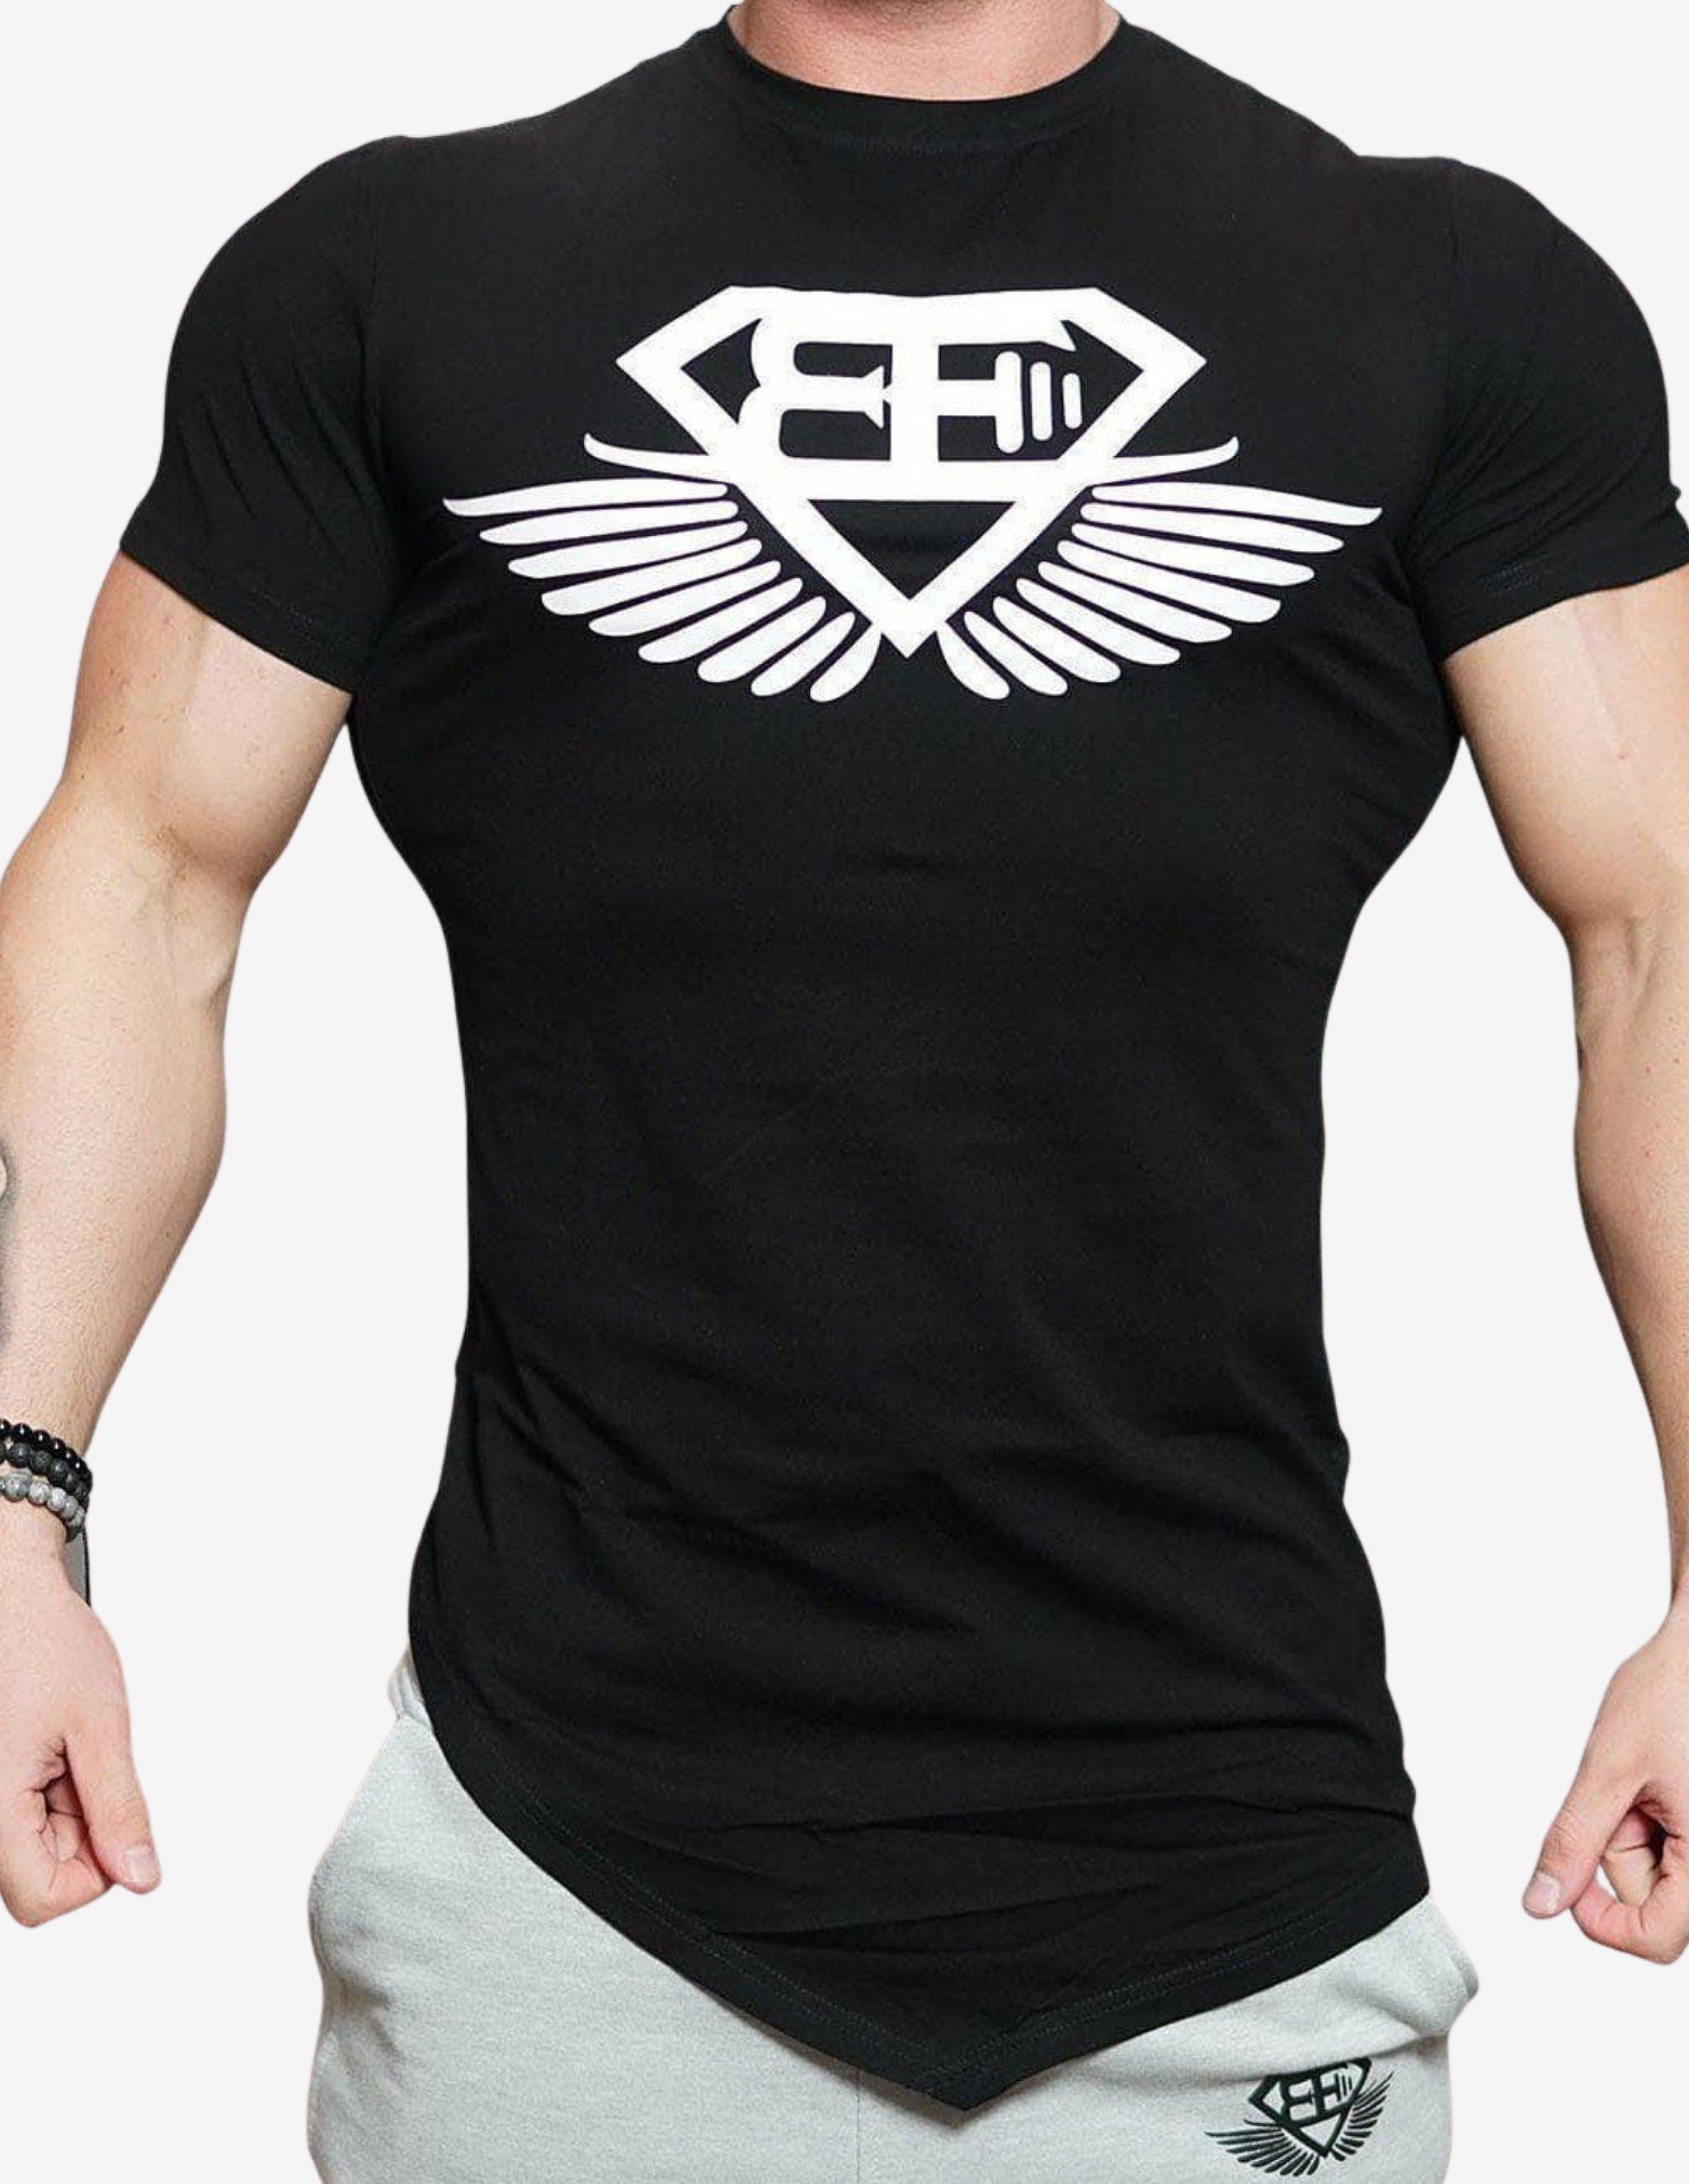 Engineered Life Black Shirt | Body Engineers | Guru Muscle